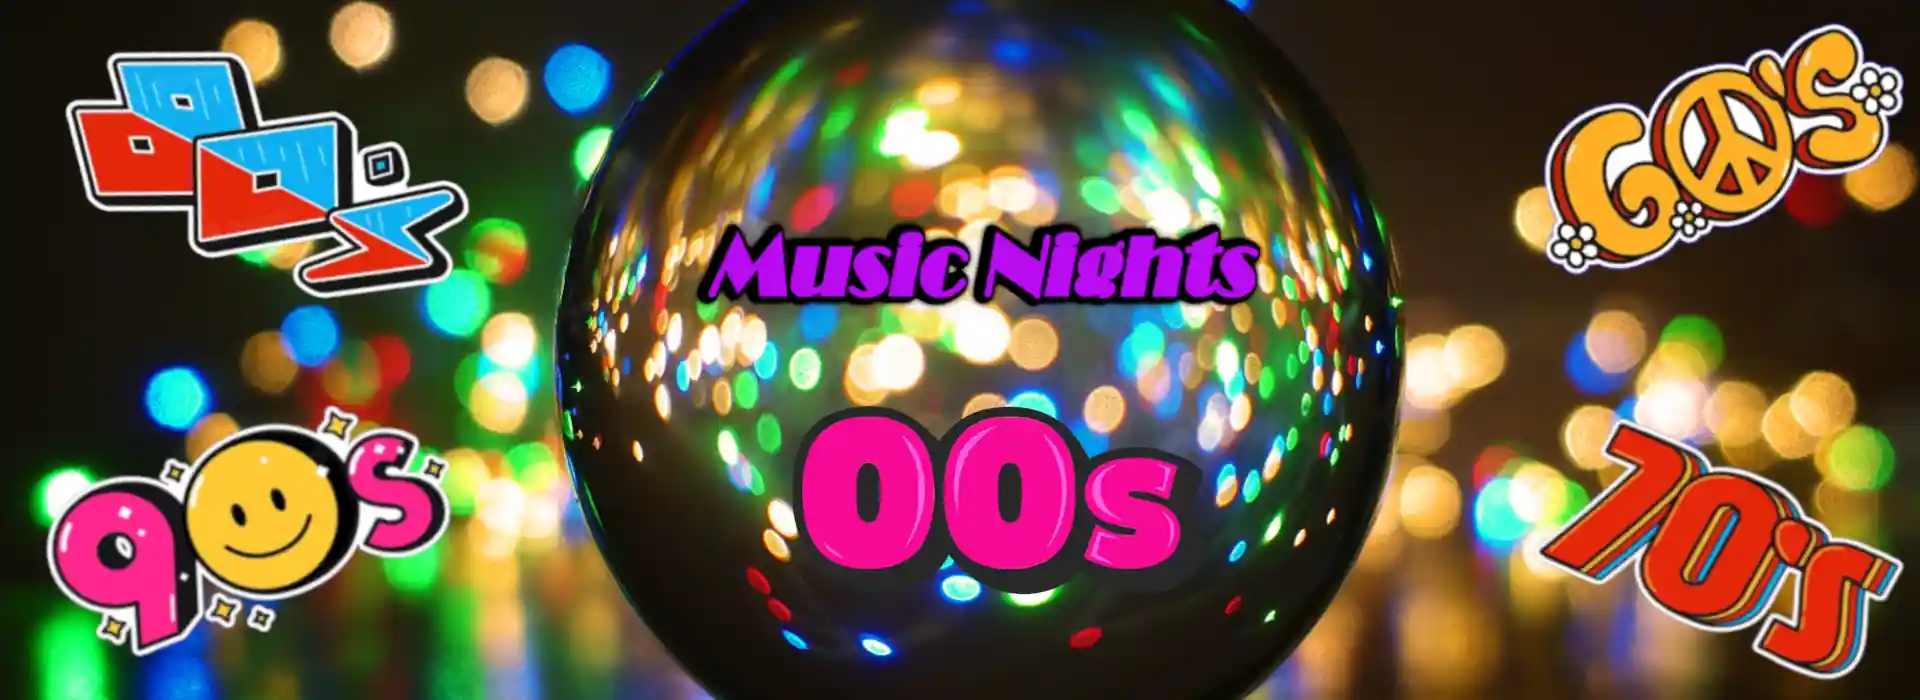 Music Theme Nights